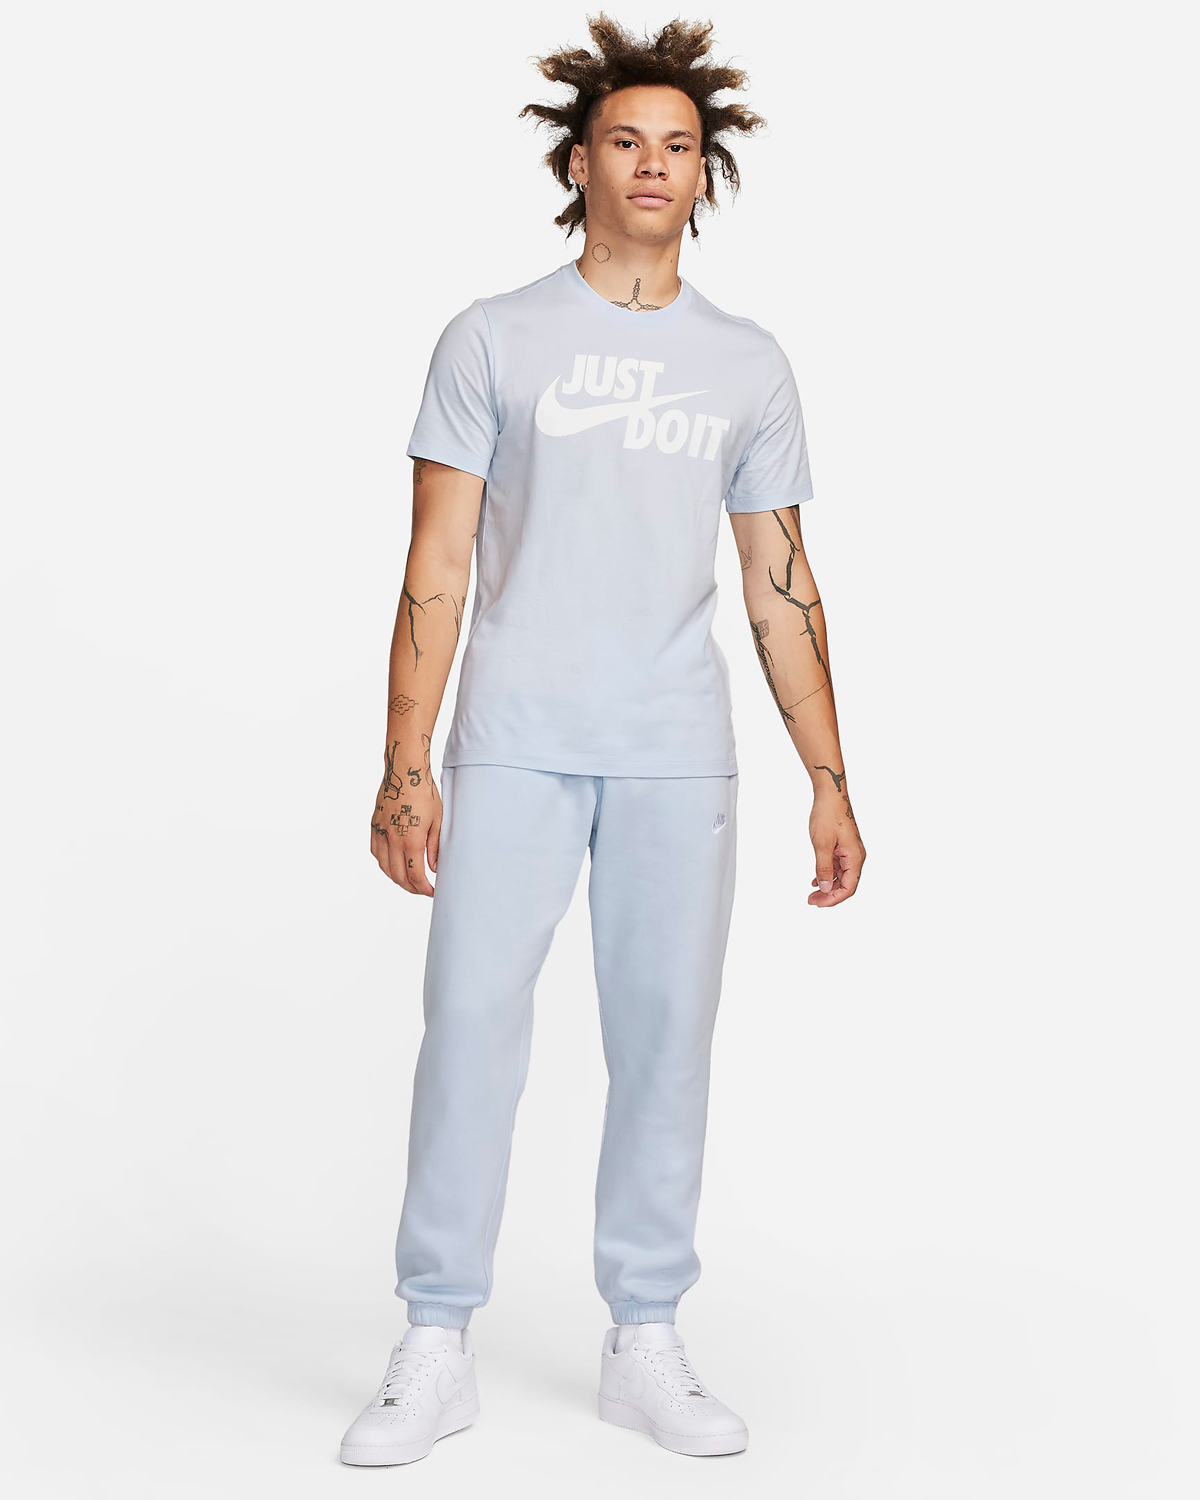 Nike Football Grey Clothing Shirts Hoodies Pants Sneakers